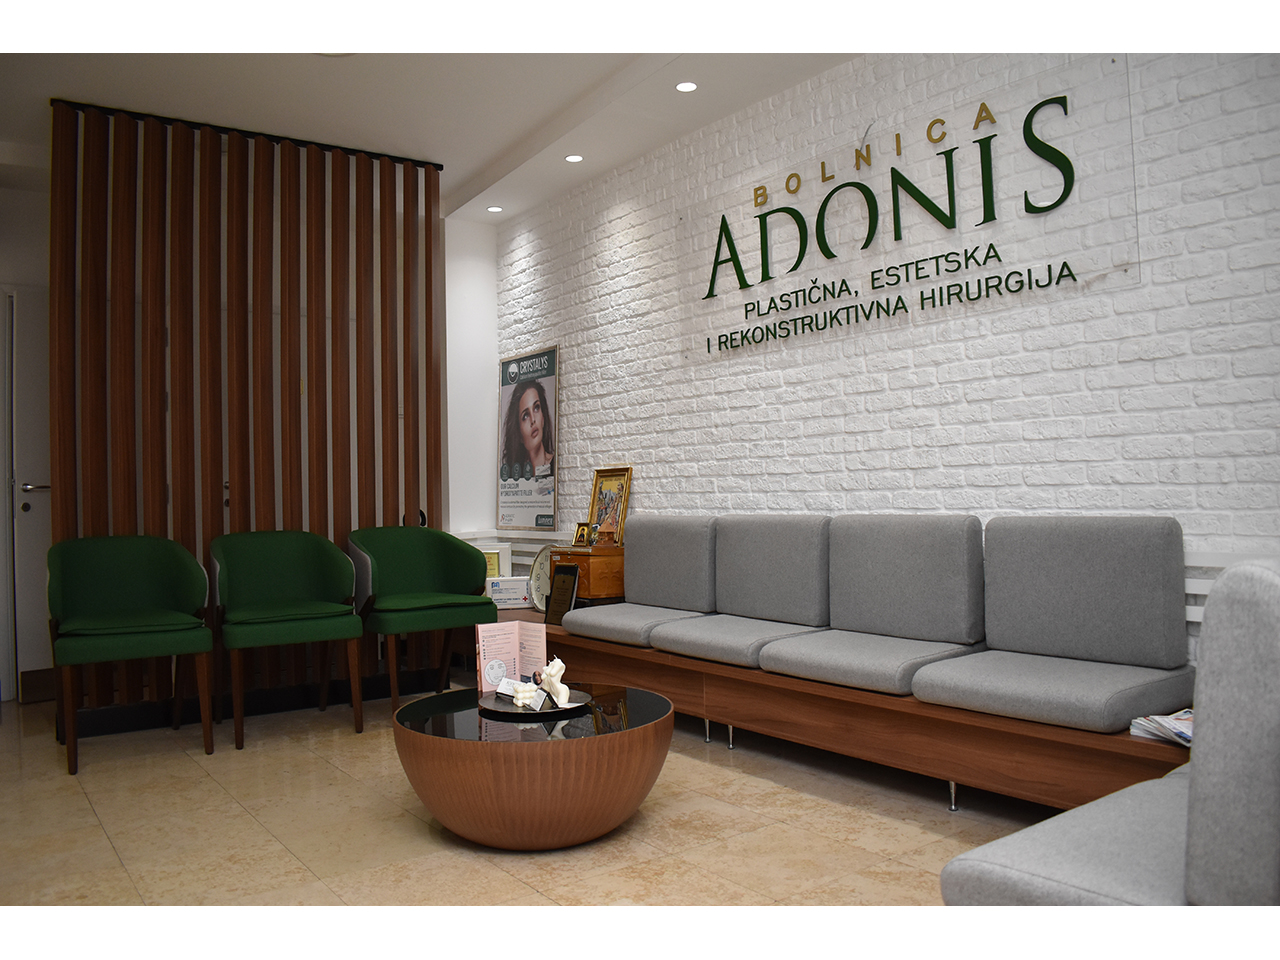 HOSPITAL ADONIS Surgery Beograd